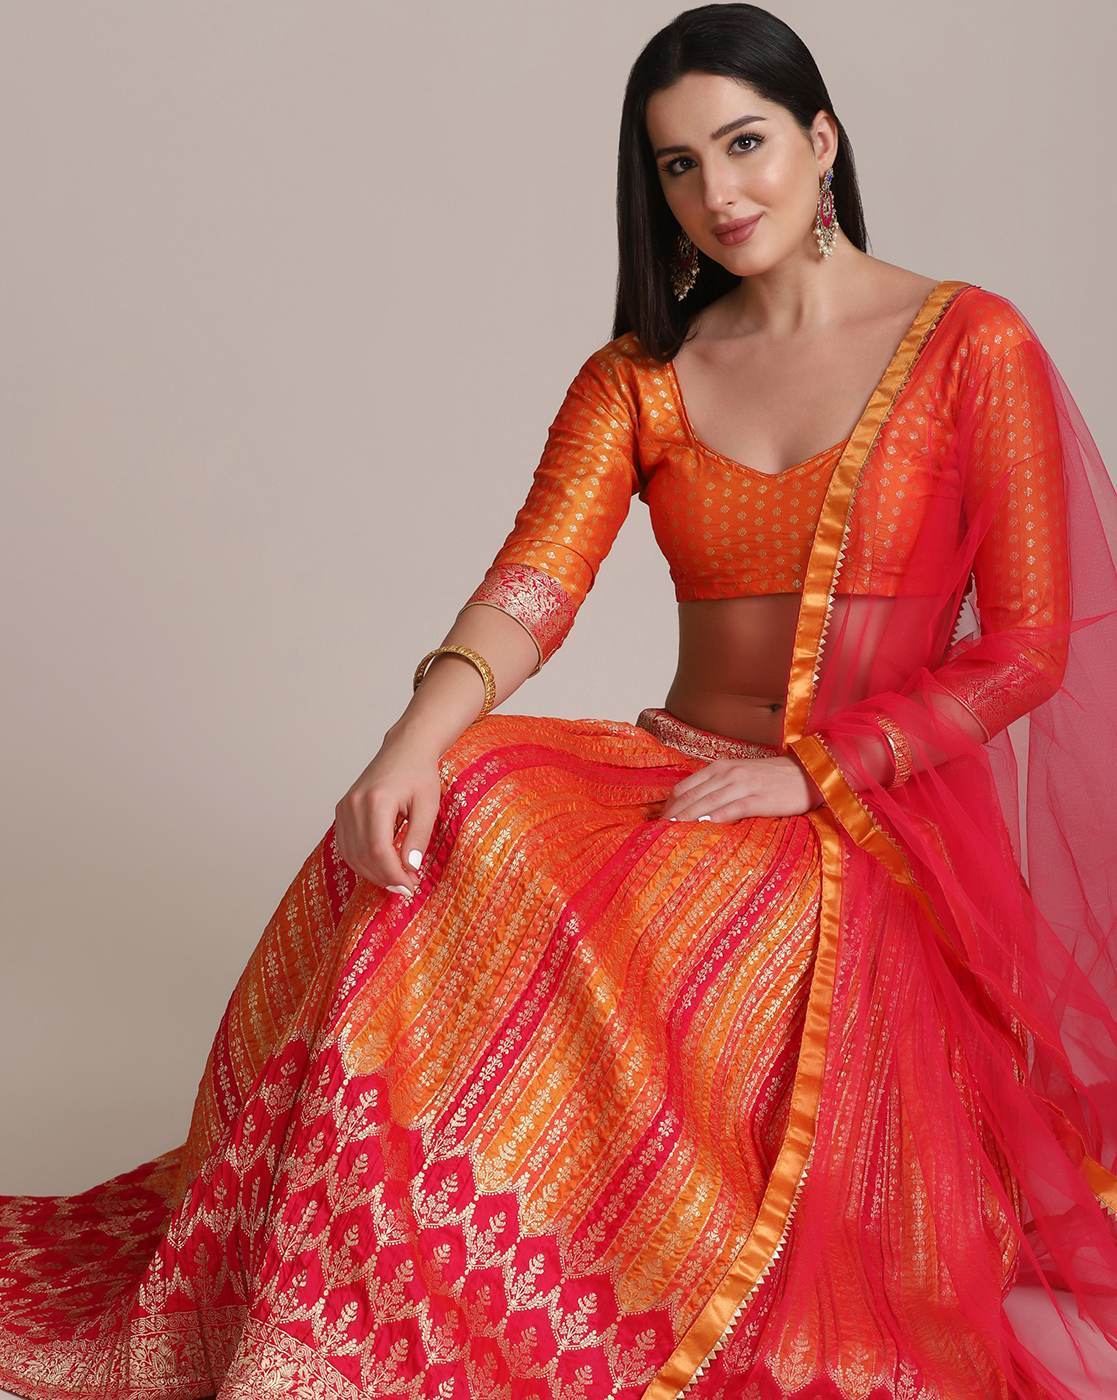 Beautiful Indian Woman Golden Orange Lehenga Stock Photo 1734128978 |  Shutterstock